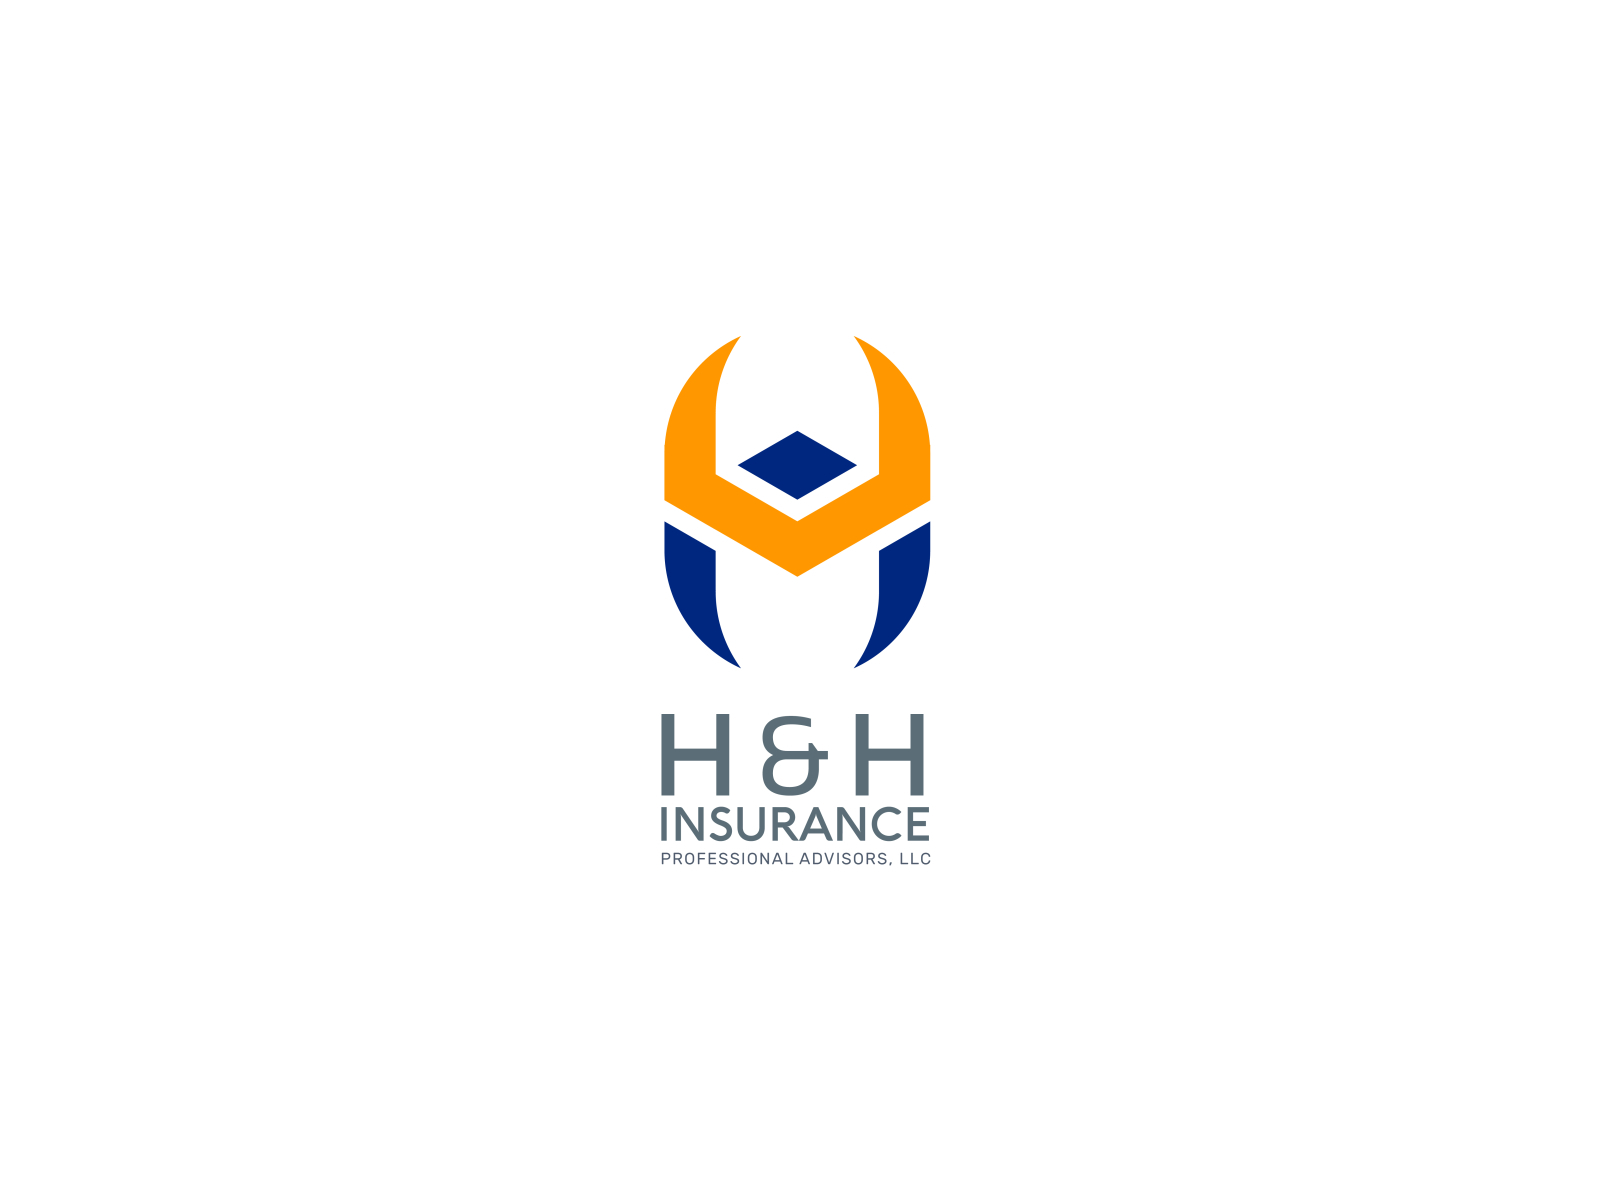 H&H INSURANCE LLC by M6G on Dribbble